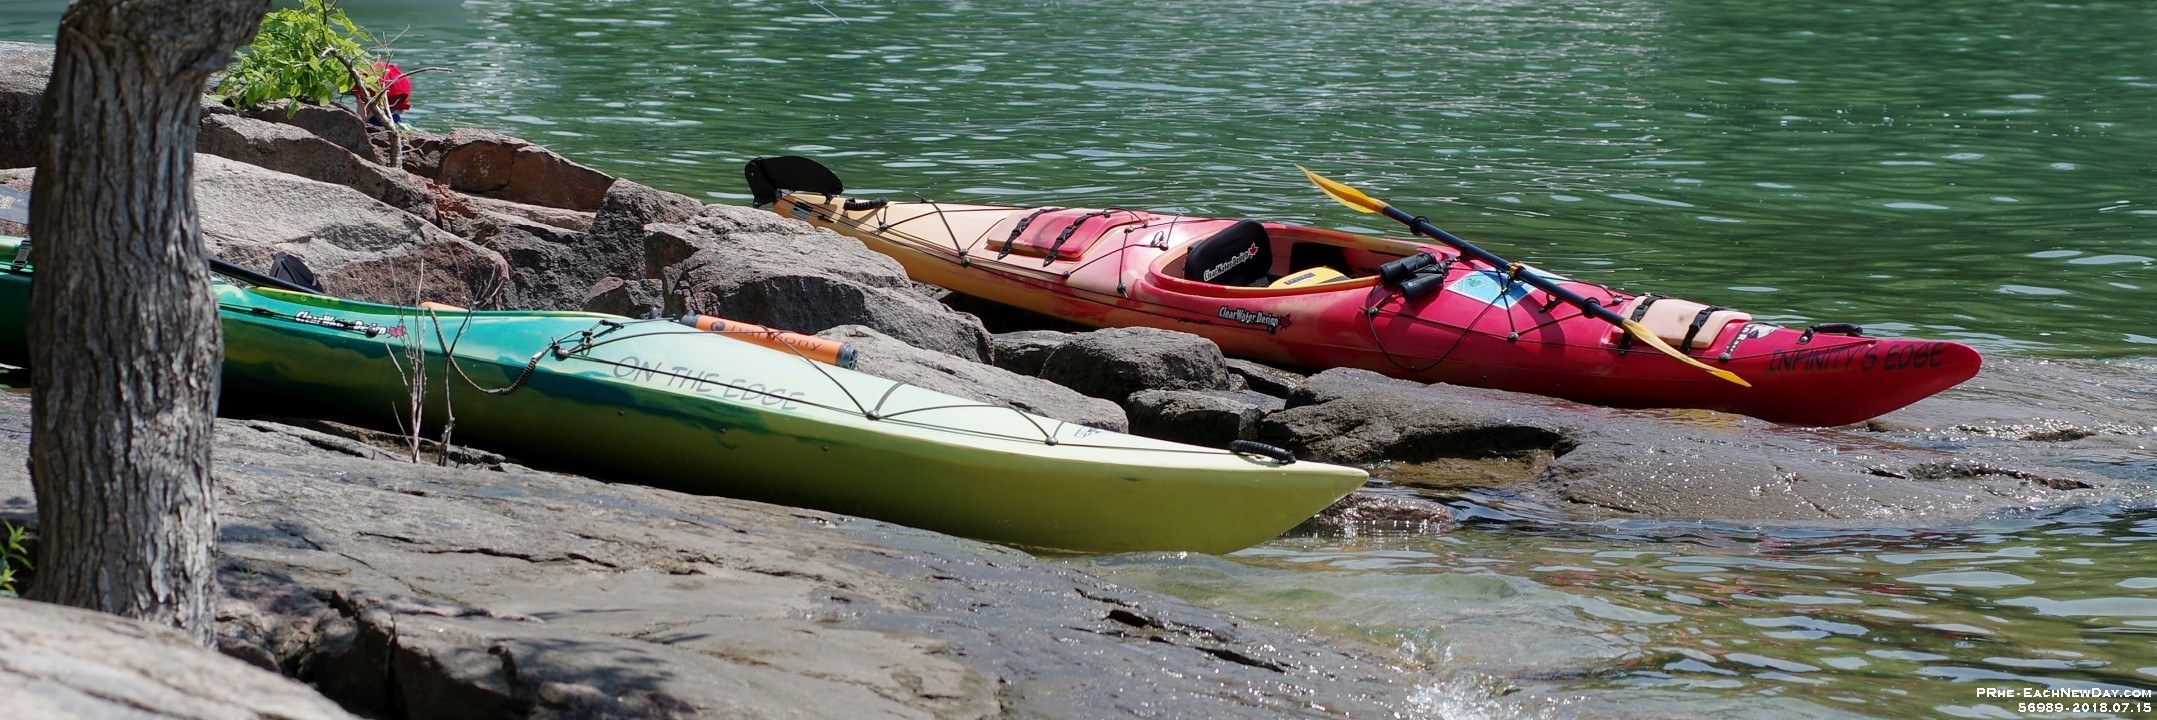 56989CrLeSh - Kayaking from Gananoque to Thwartway Island, and back